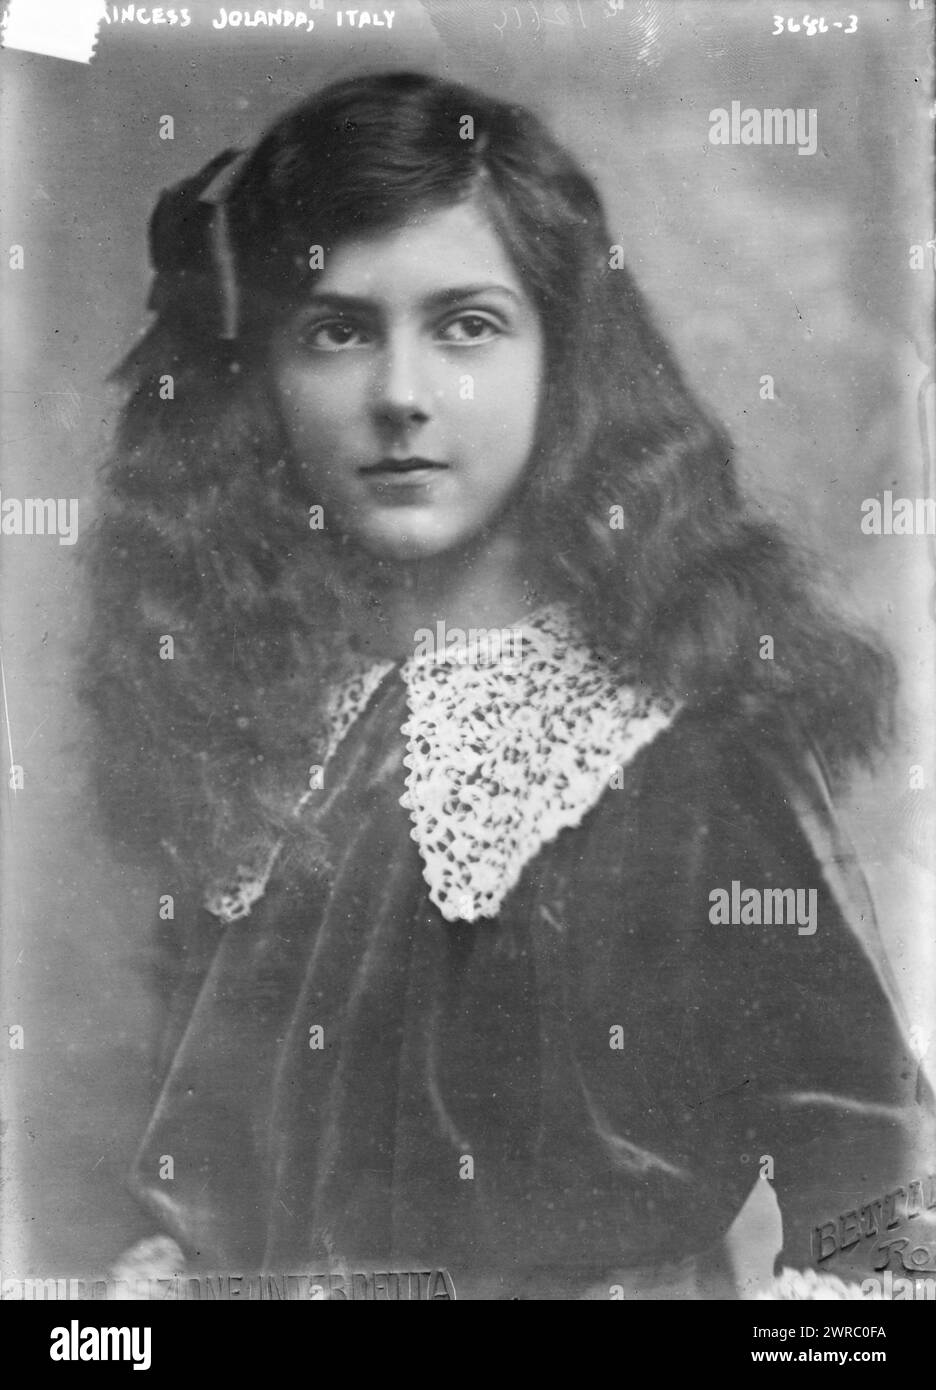 Princess Jolanda i.e., Yolanda, Italy, Photograph shows Princess Yolanda of Savoy (1901-1986)., between ca. 1910 and ca. 1915, Glass negatives, 1 negative: glass Stock Photo